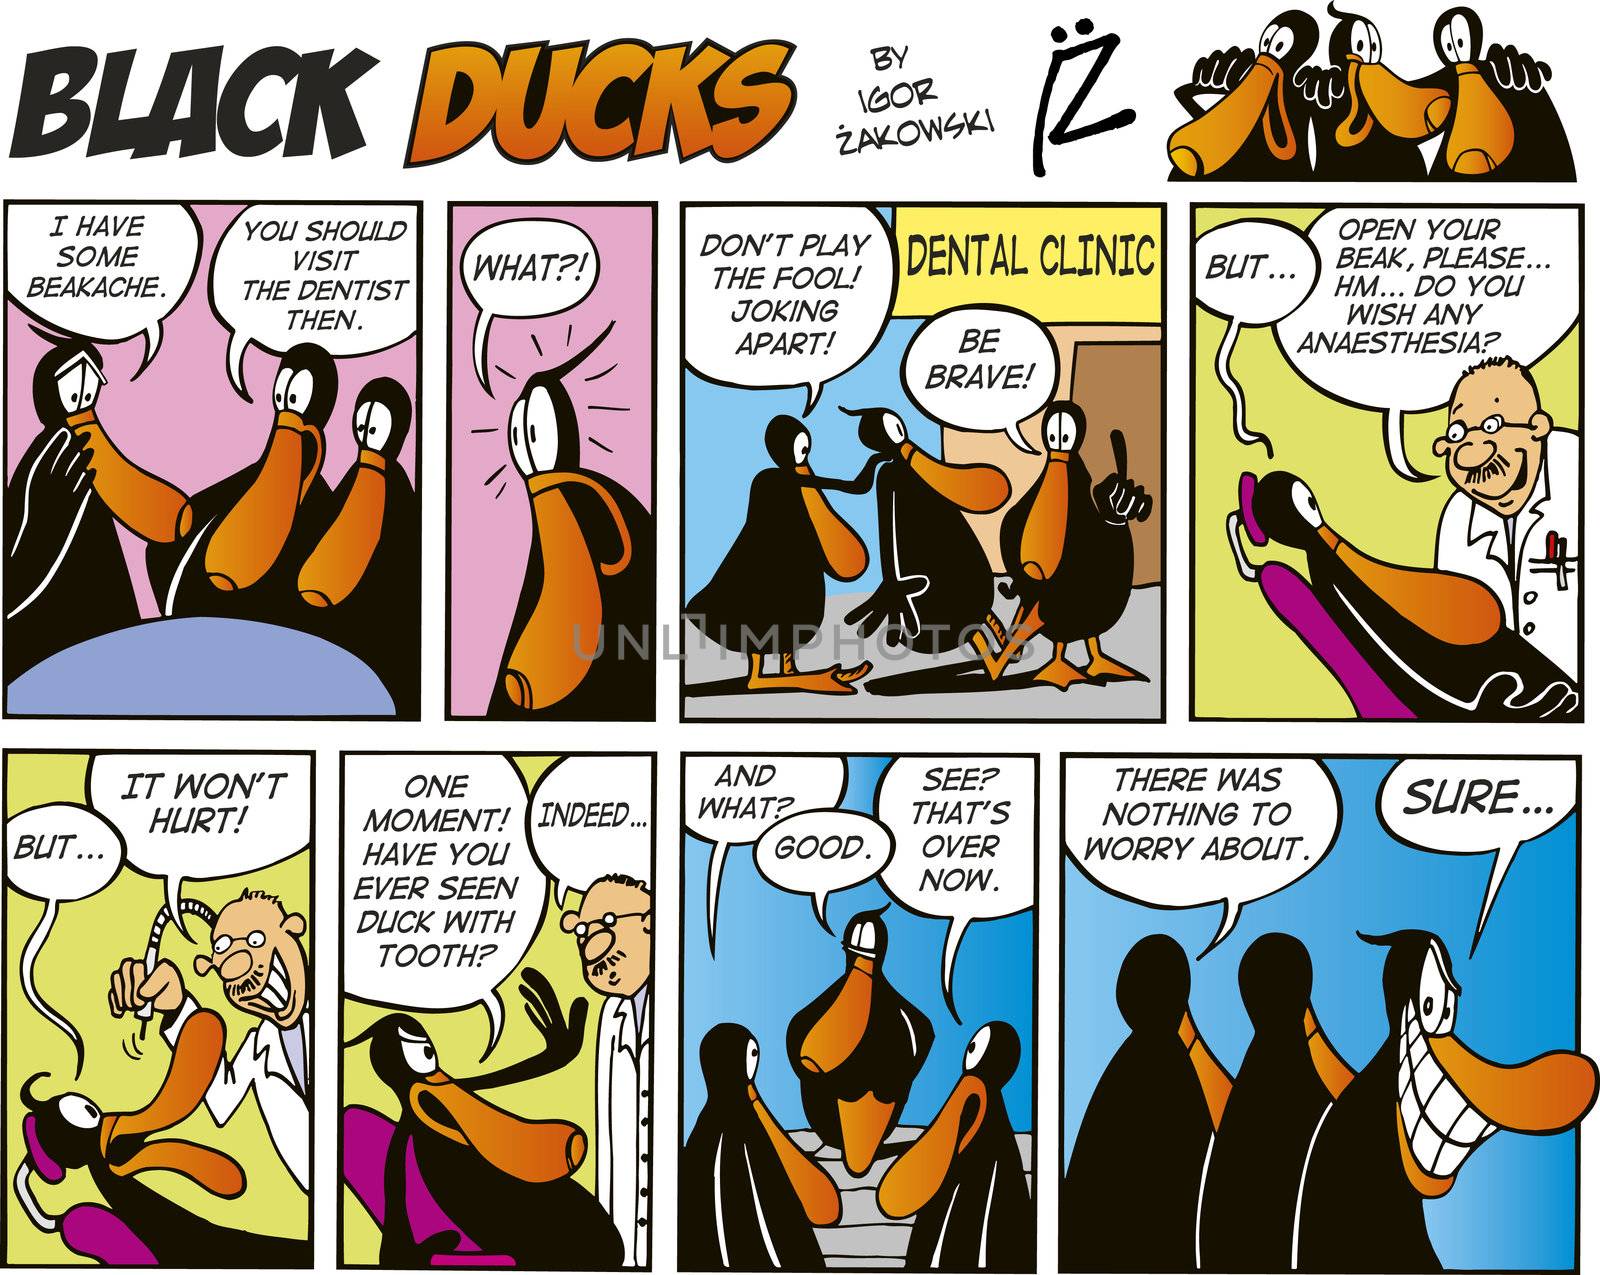 Black Ducks Comics episode 3 by izakowski